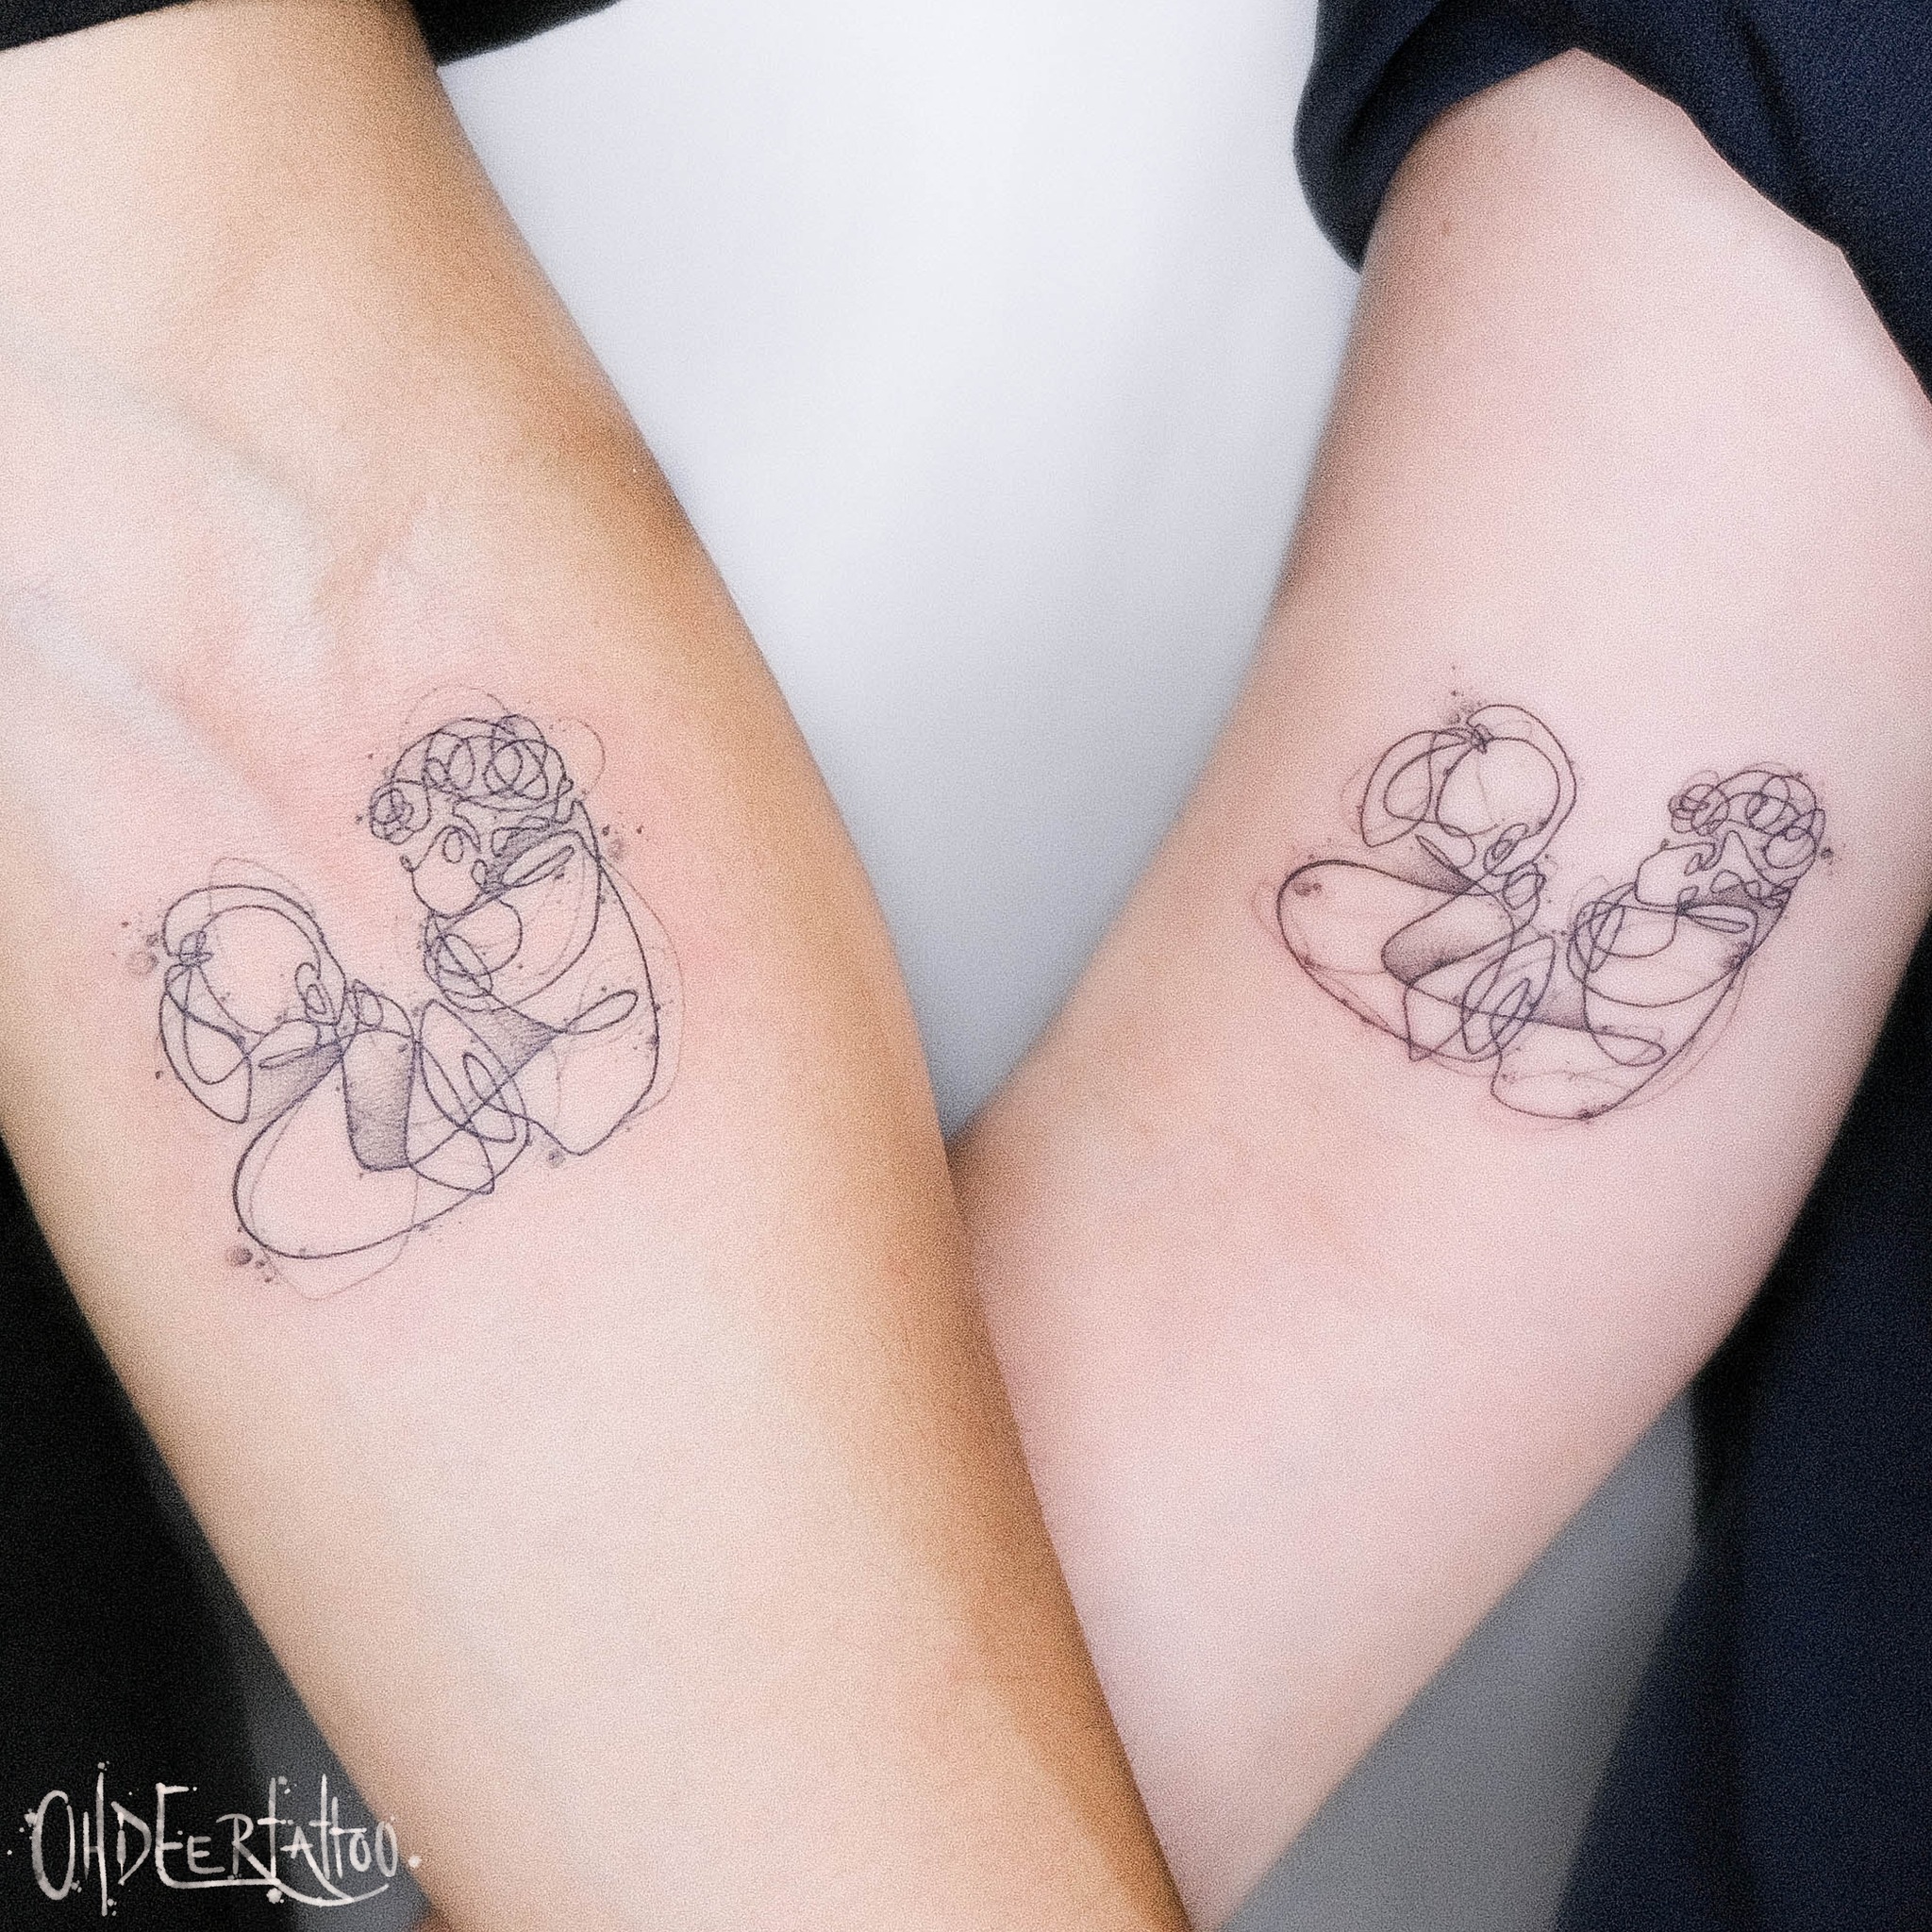 Friendship Tattoo Ideas | Designs for Friendship Tattoos